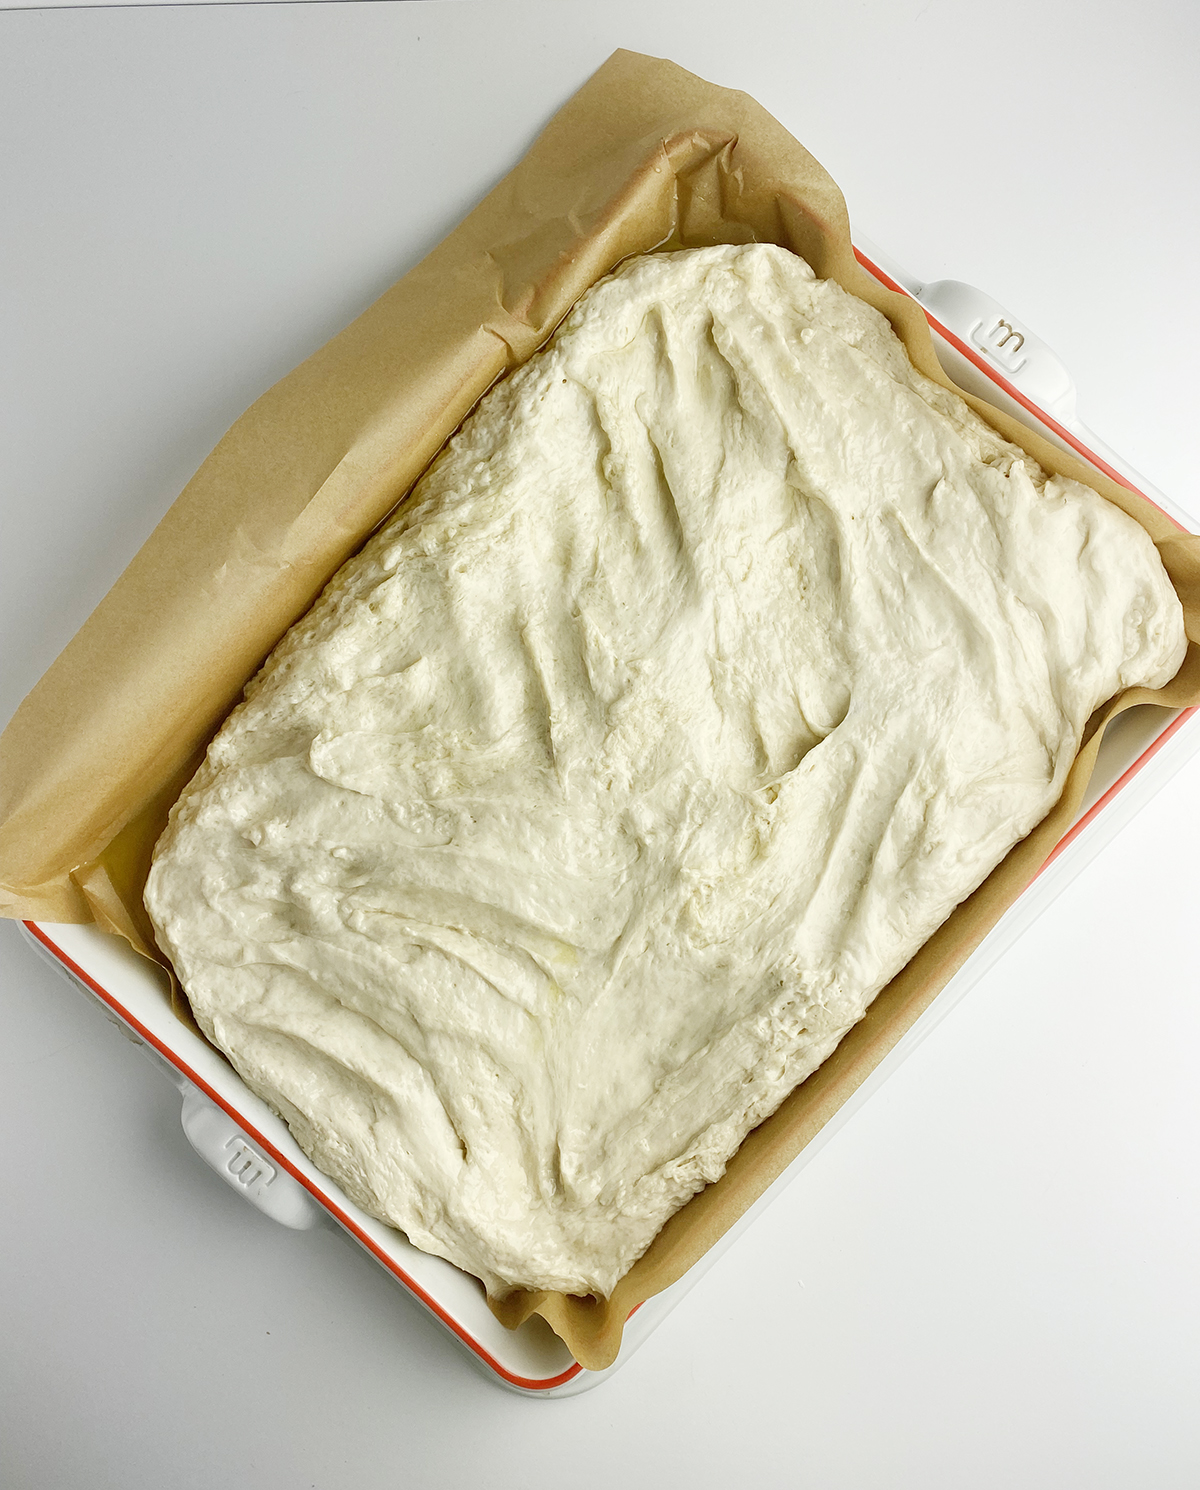 Focaccia dough second rise in a baking pan.